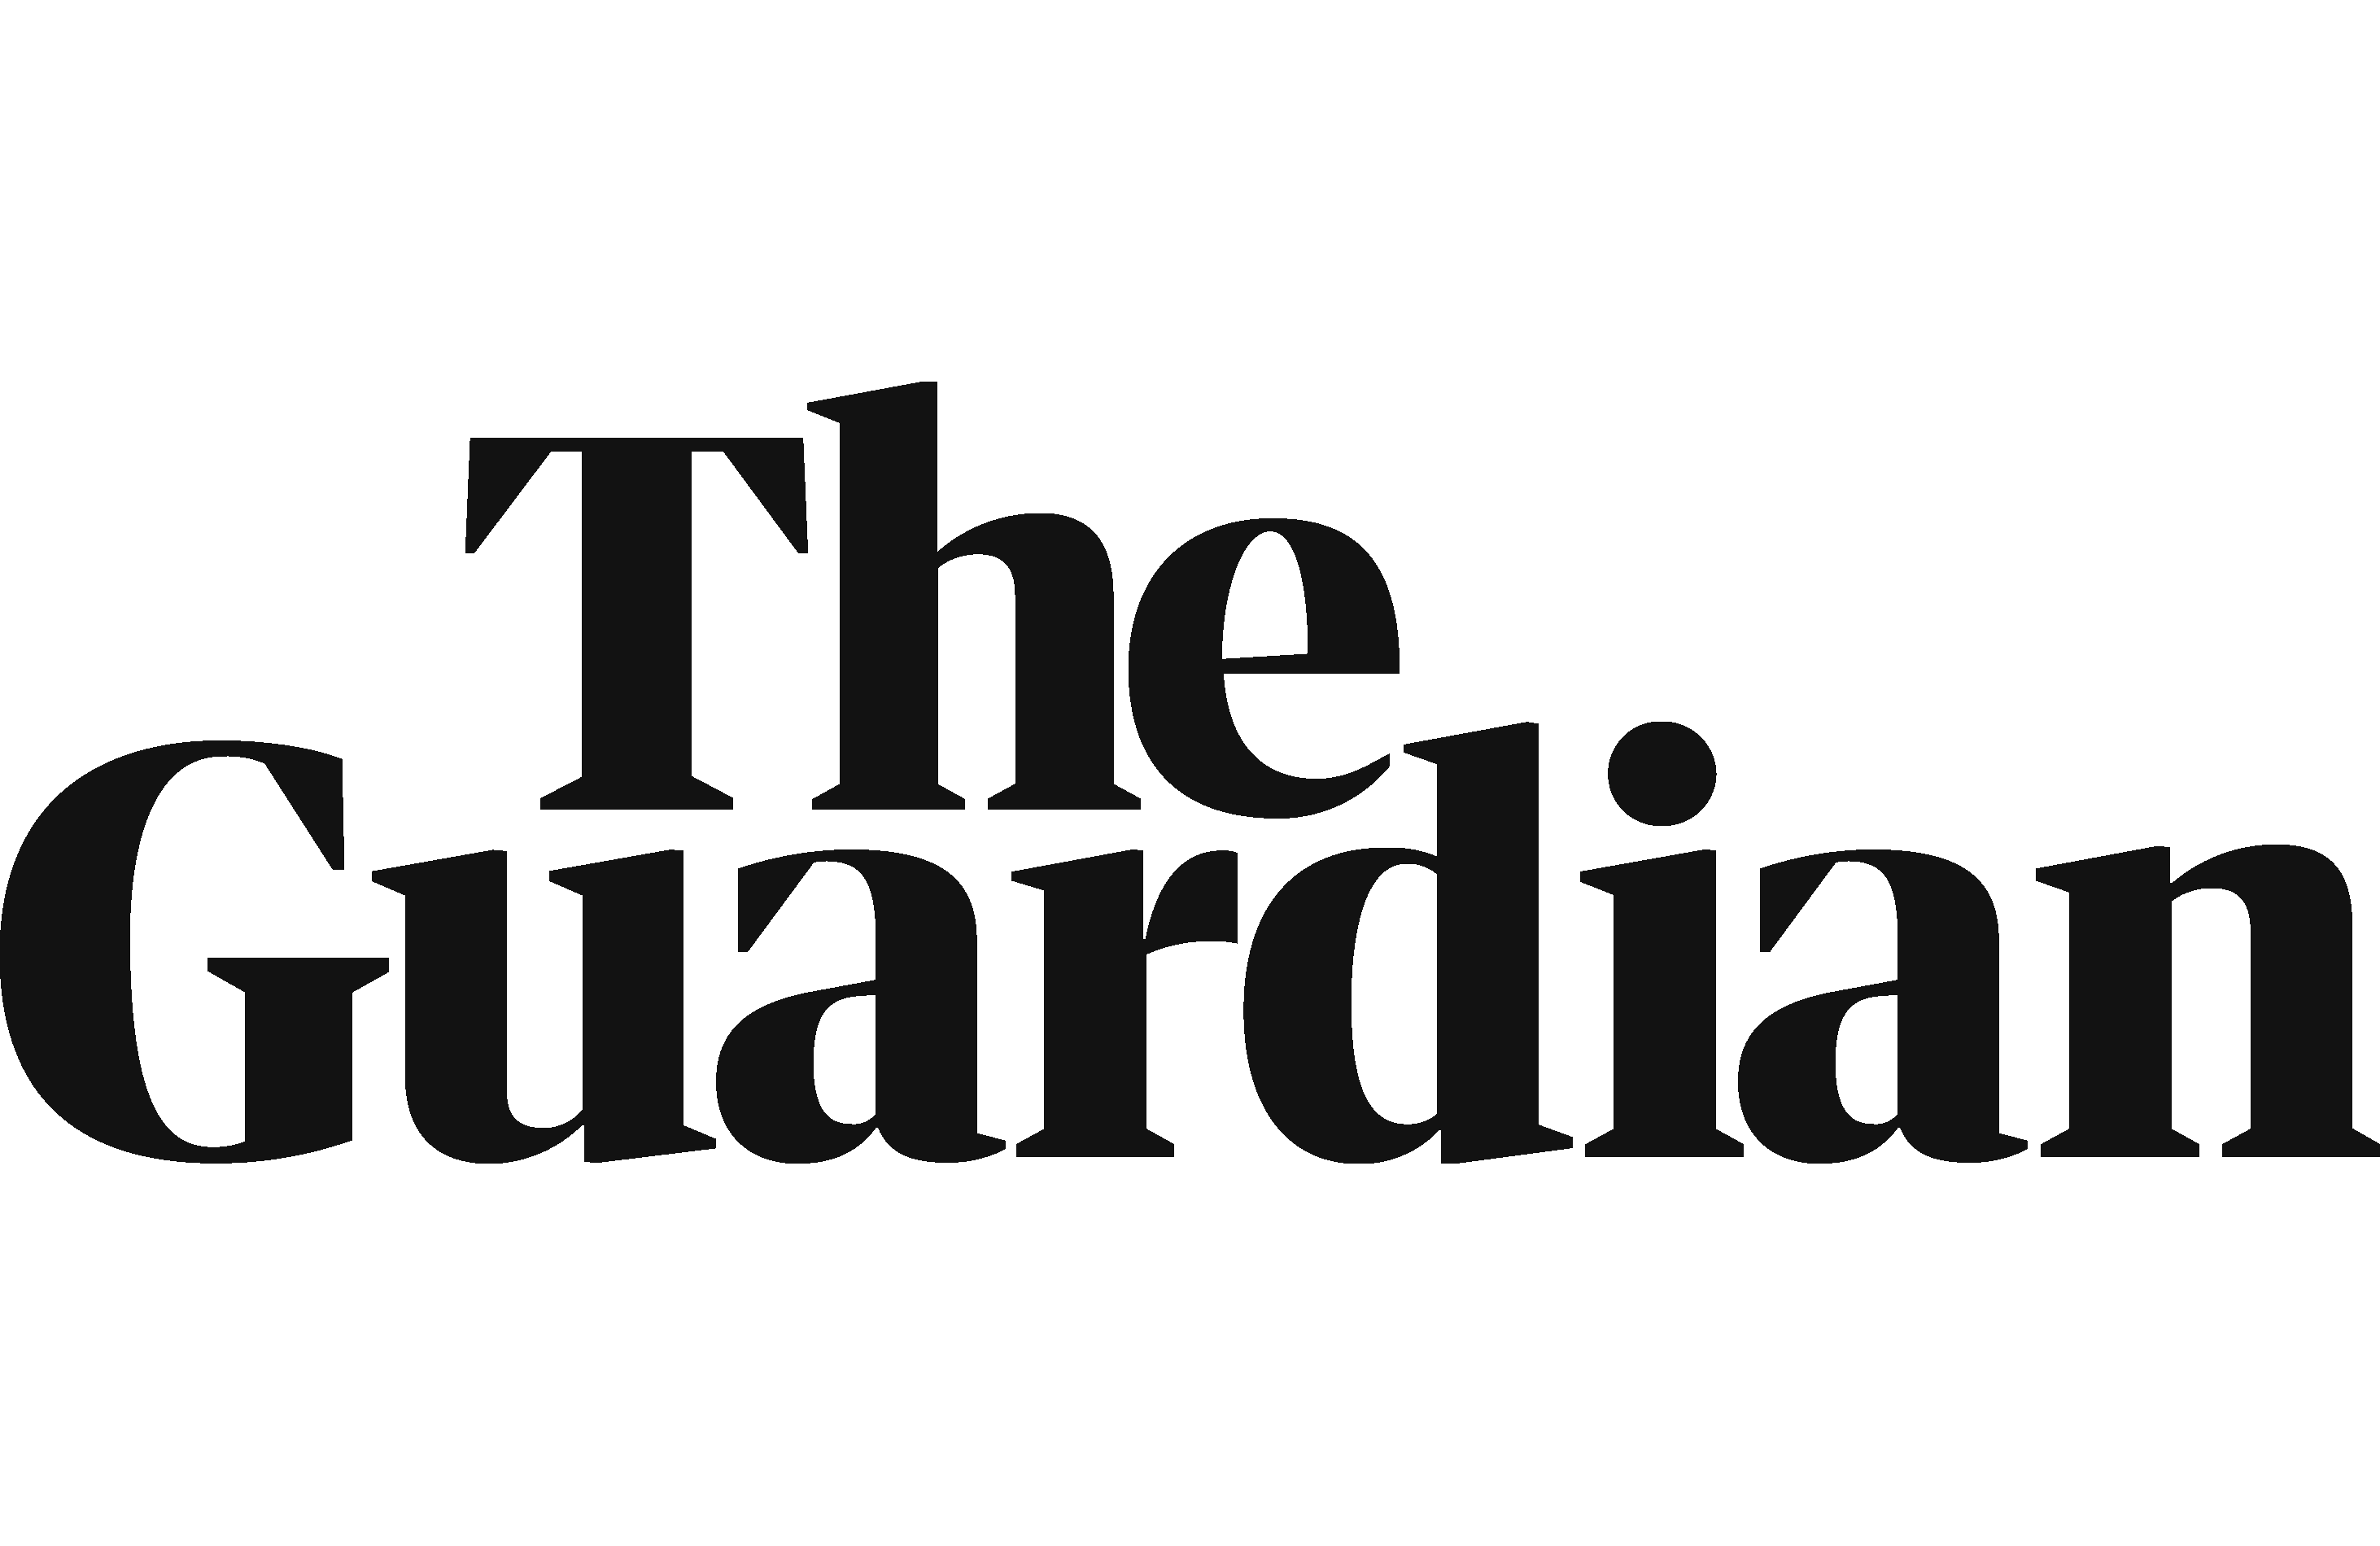 the guardian logo on keka naturals website